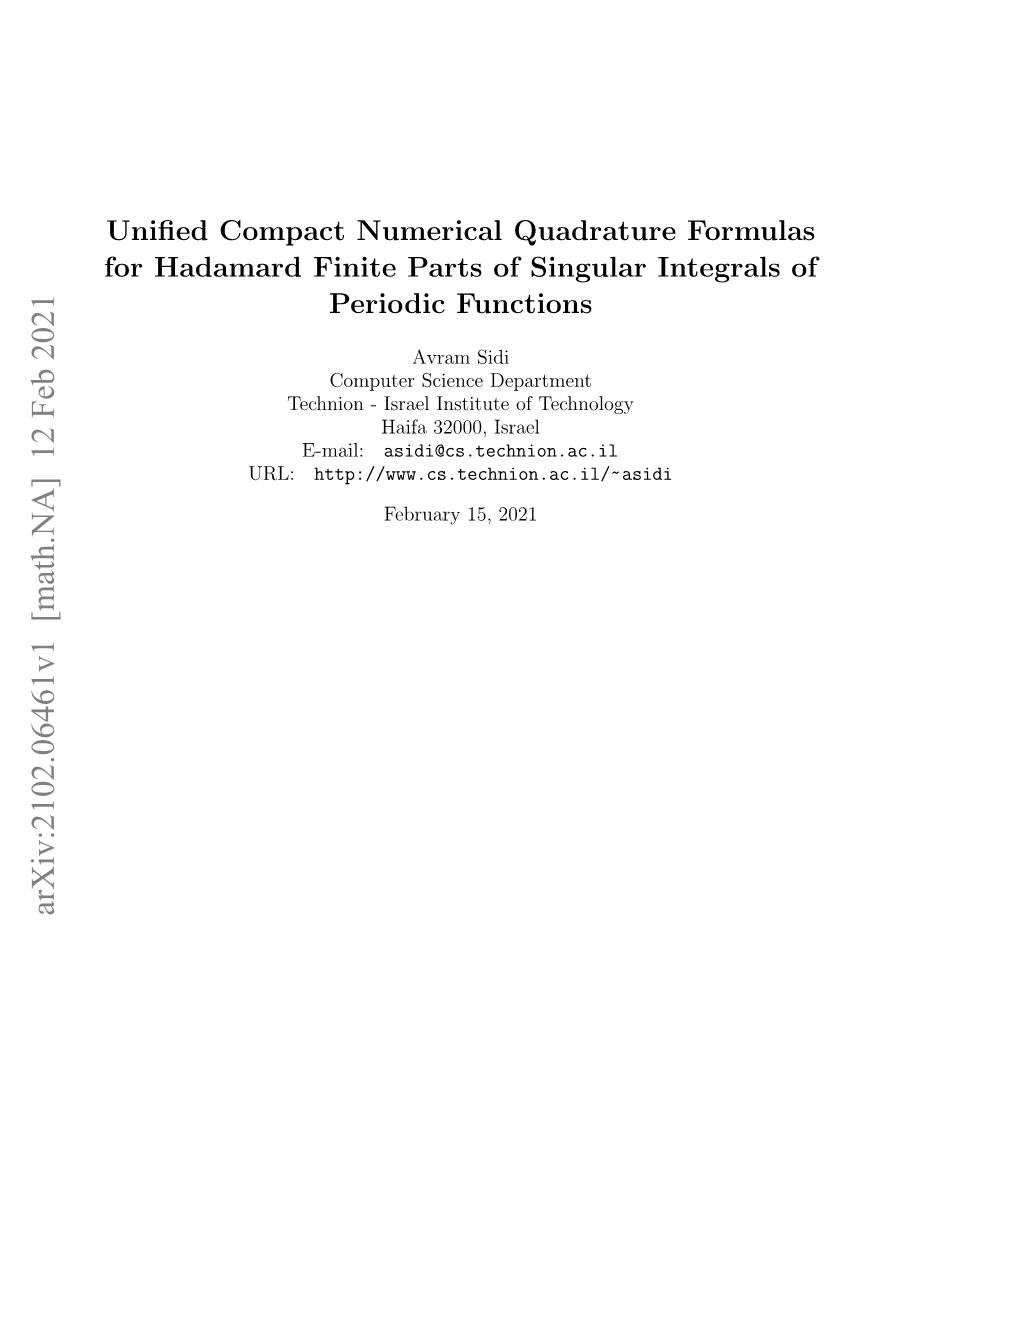 Unified Compact Numerical Quadrature Formulas for Hadamard